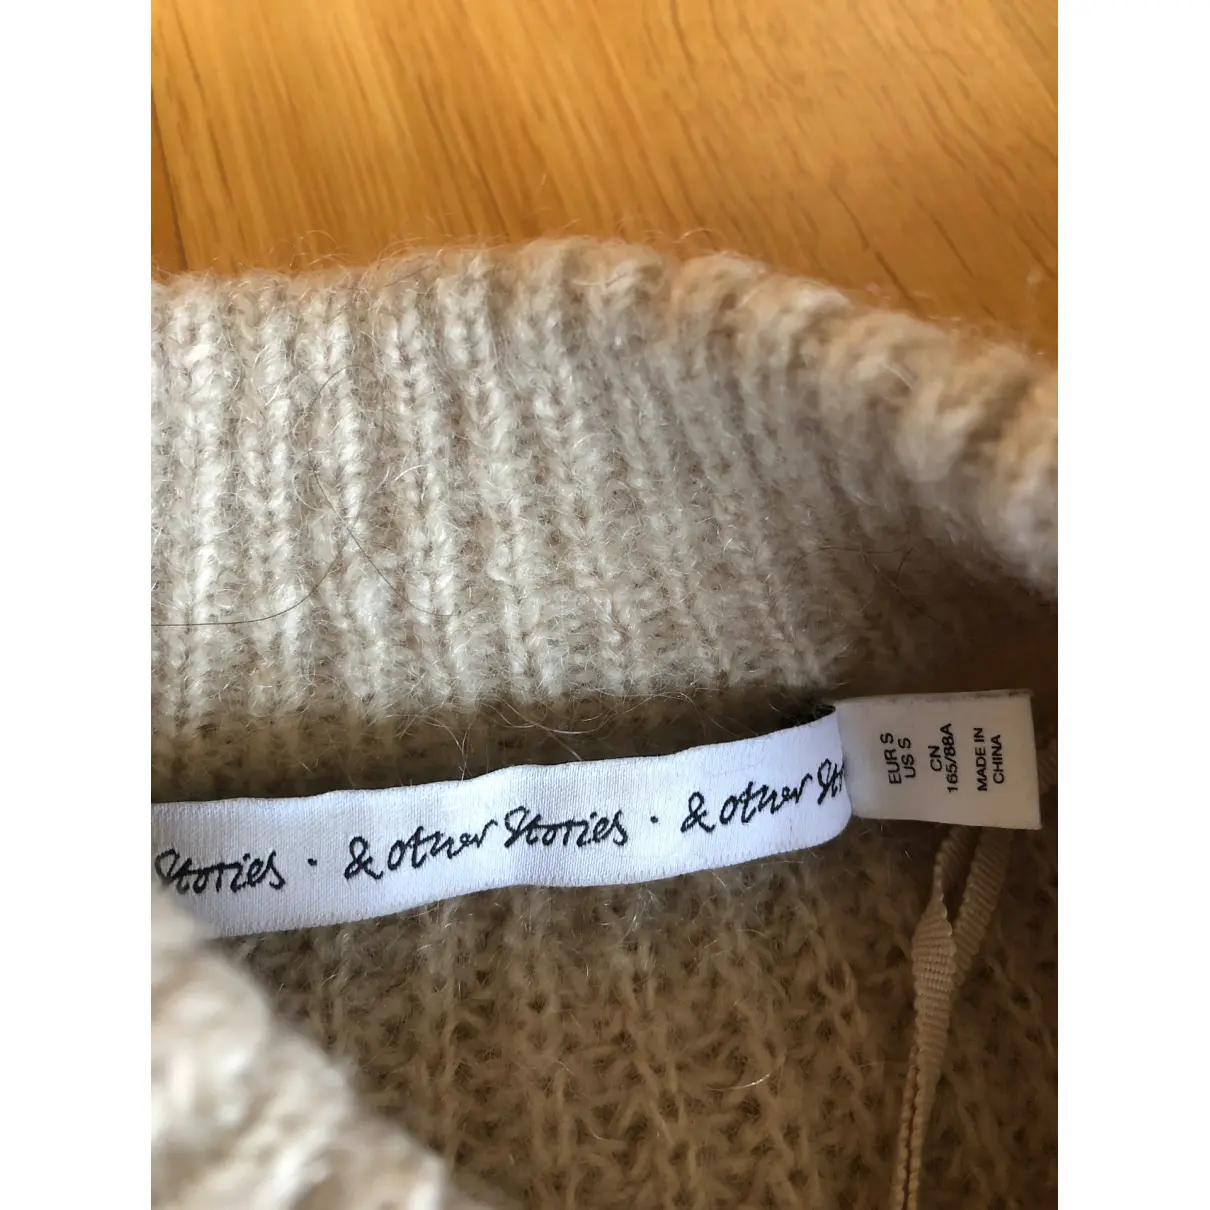 Buy & Other Stories Wool jumper online